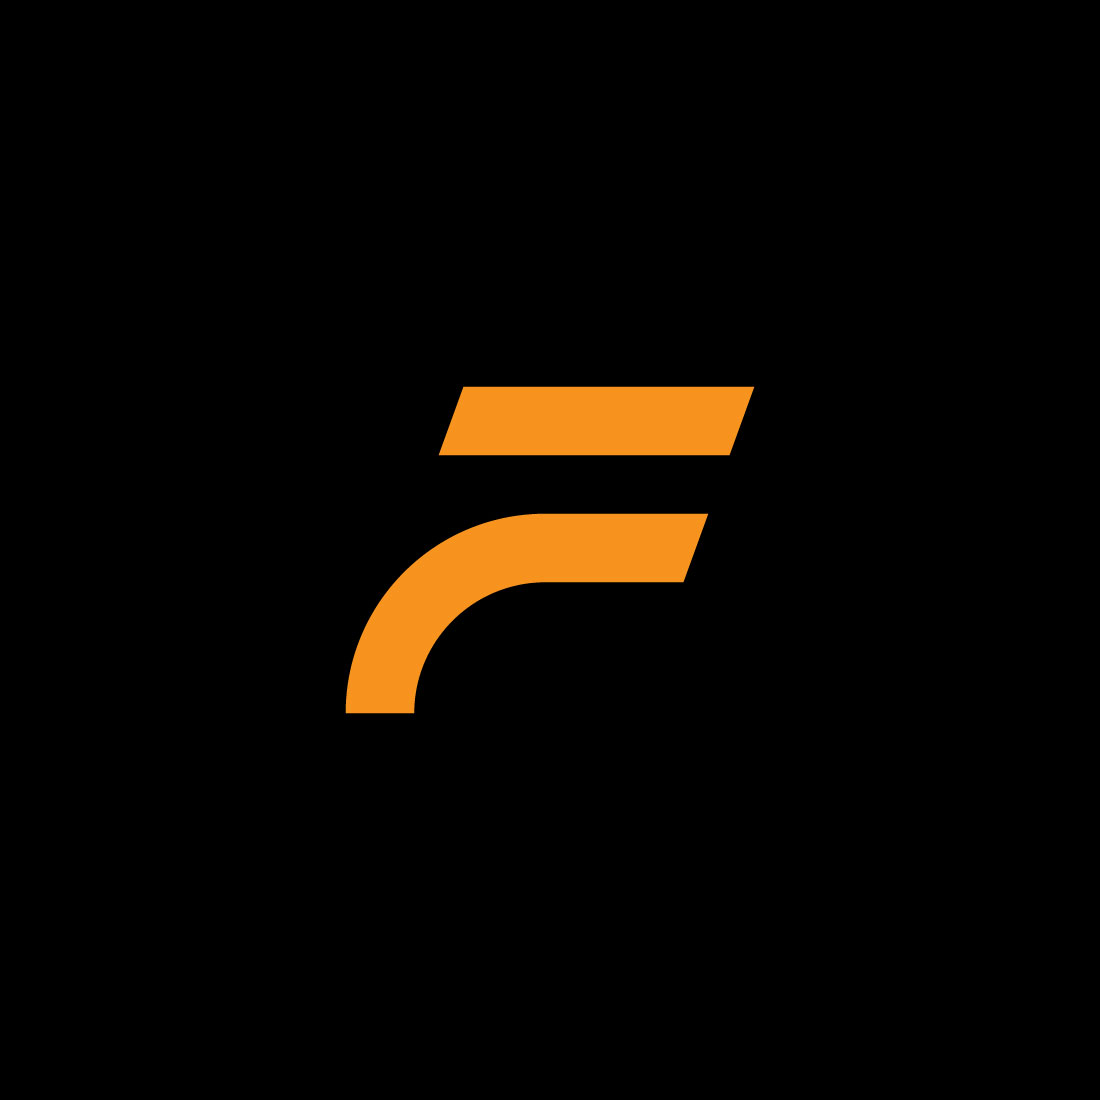 F Letter Logo Design Graphics cover image.